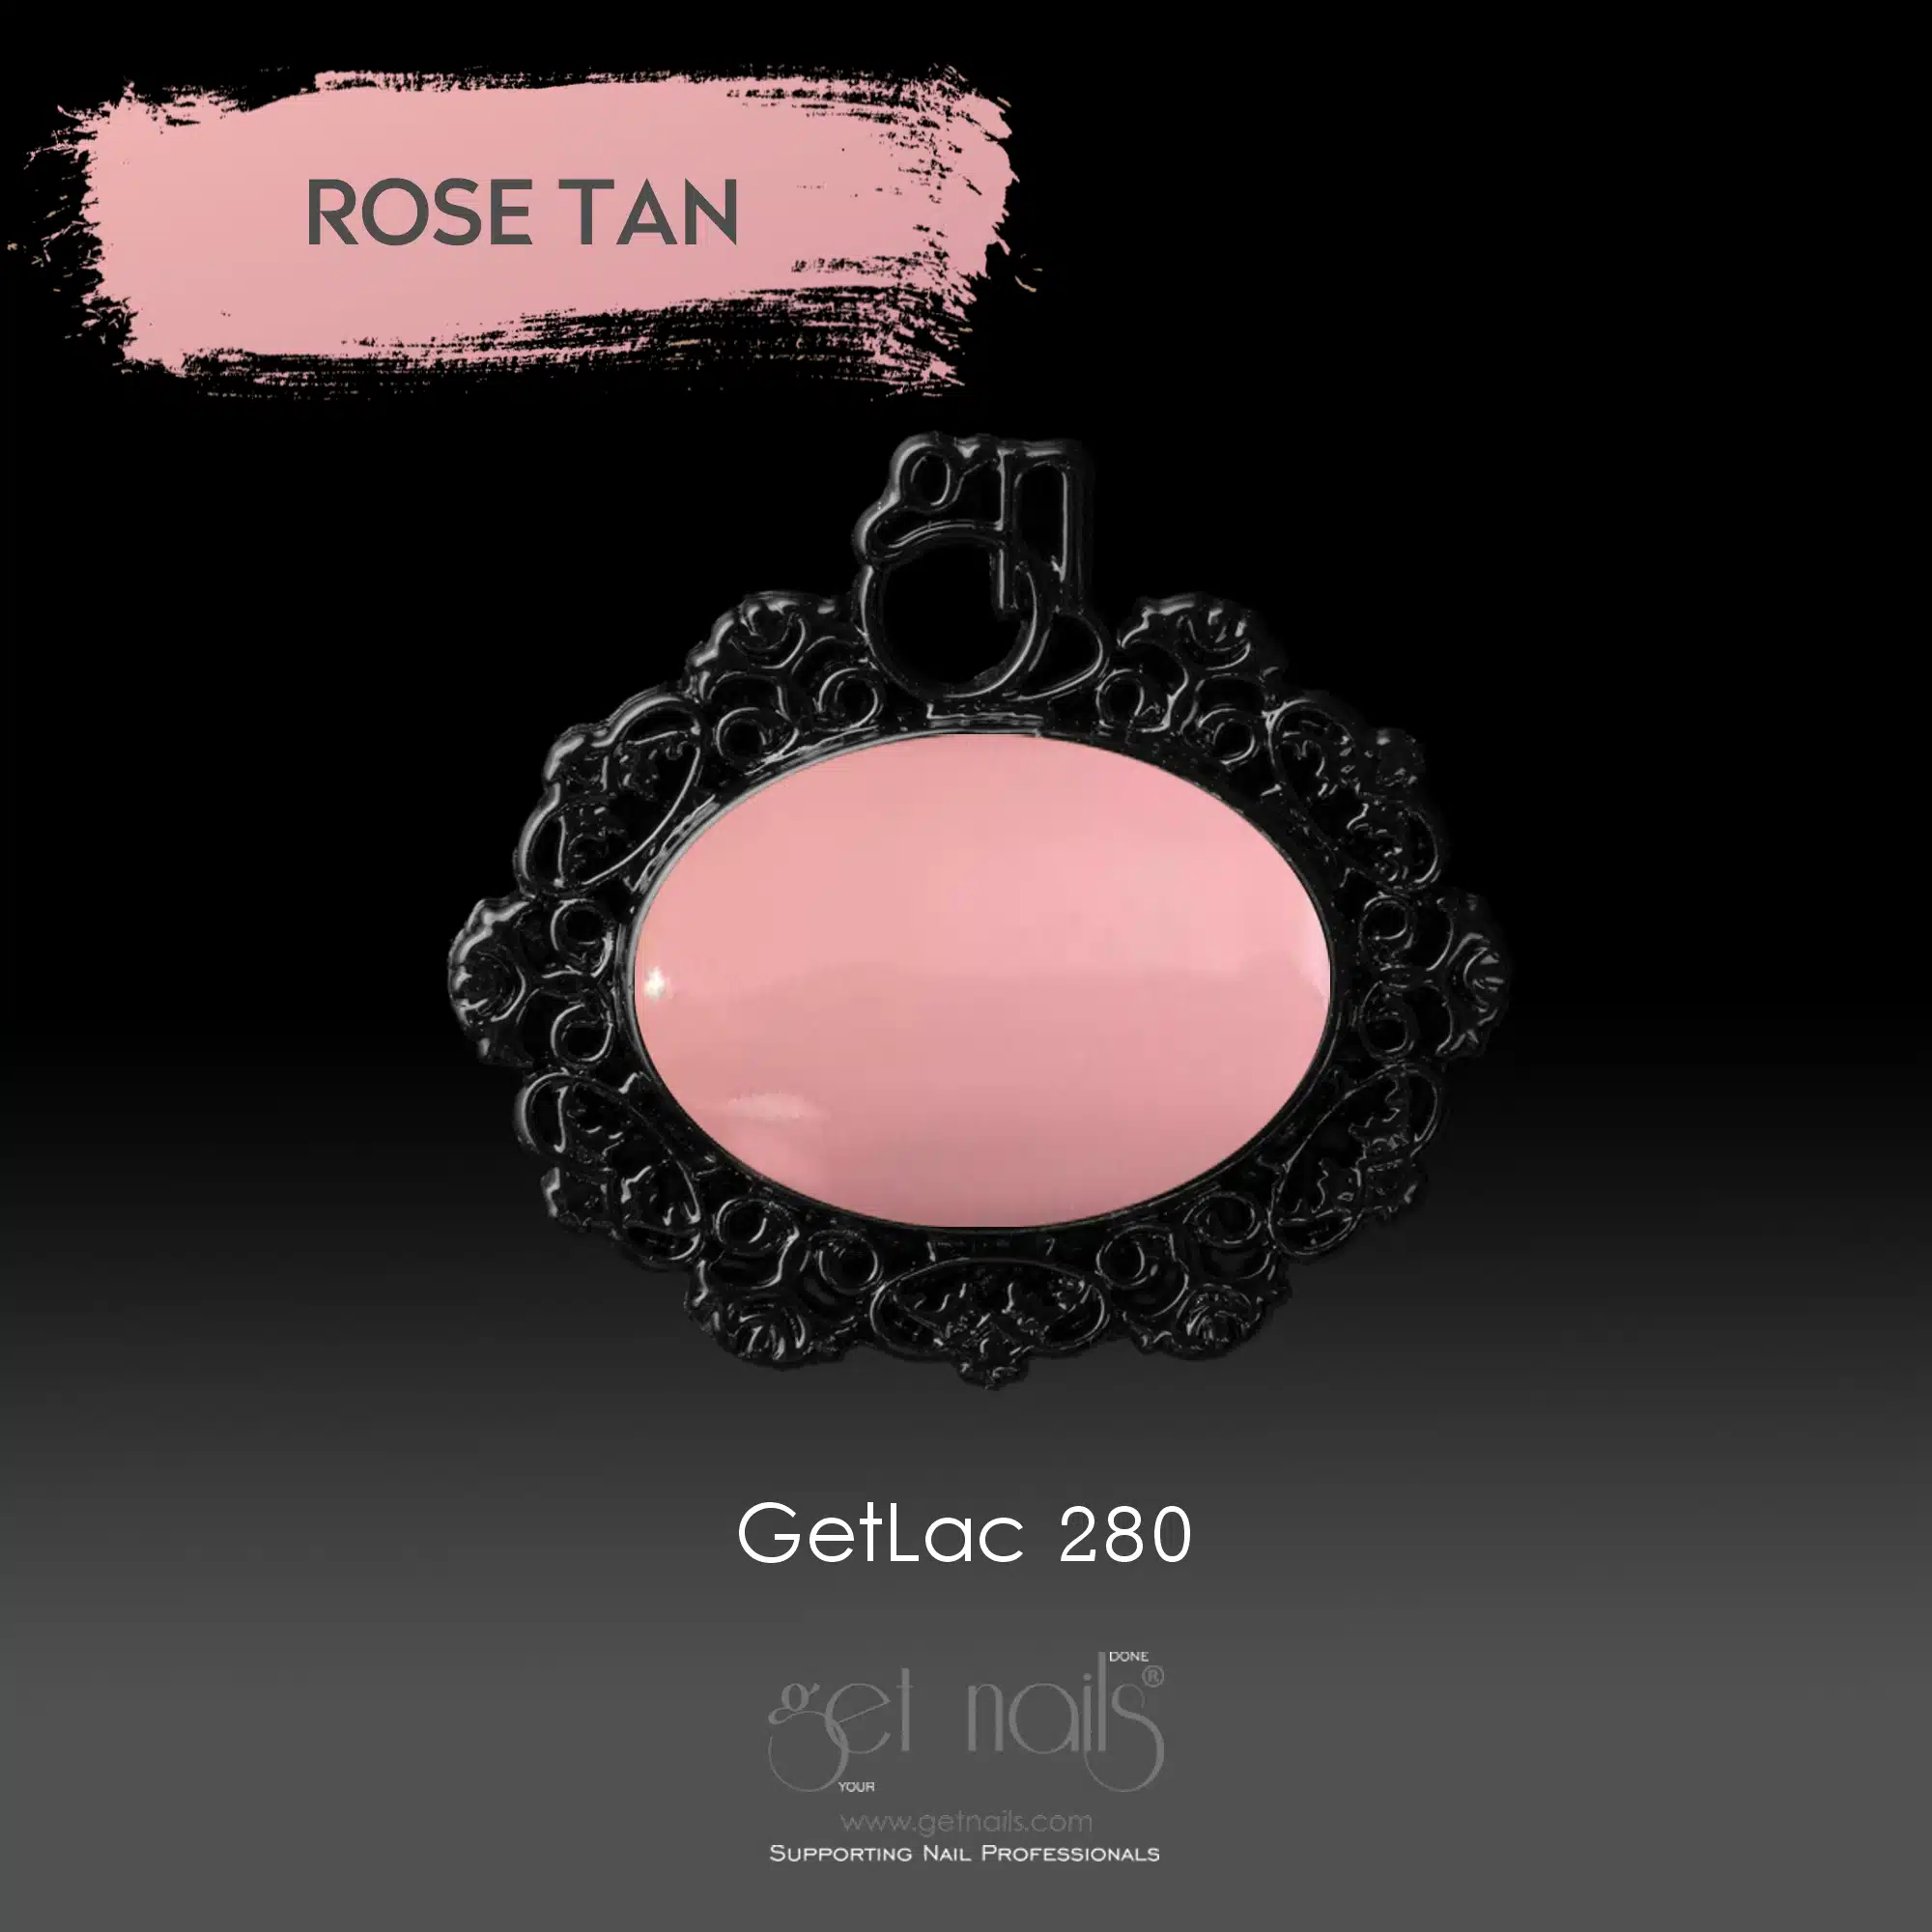 Get Nails Austria - GetLac 280 15g Rose Tan